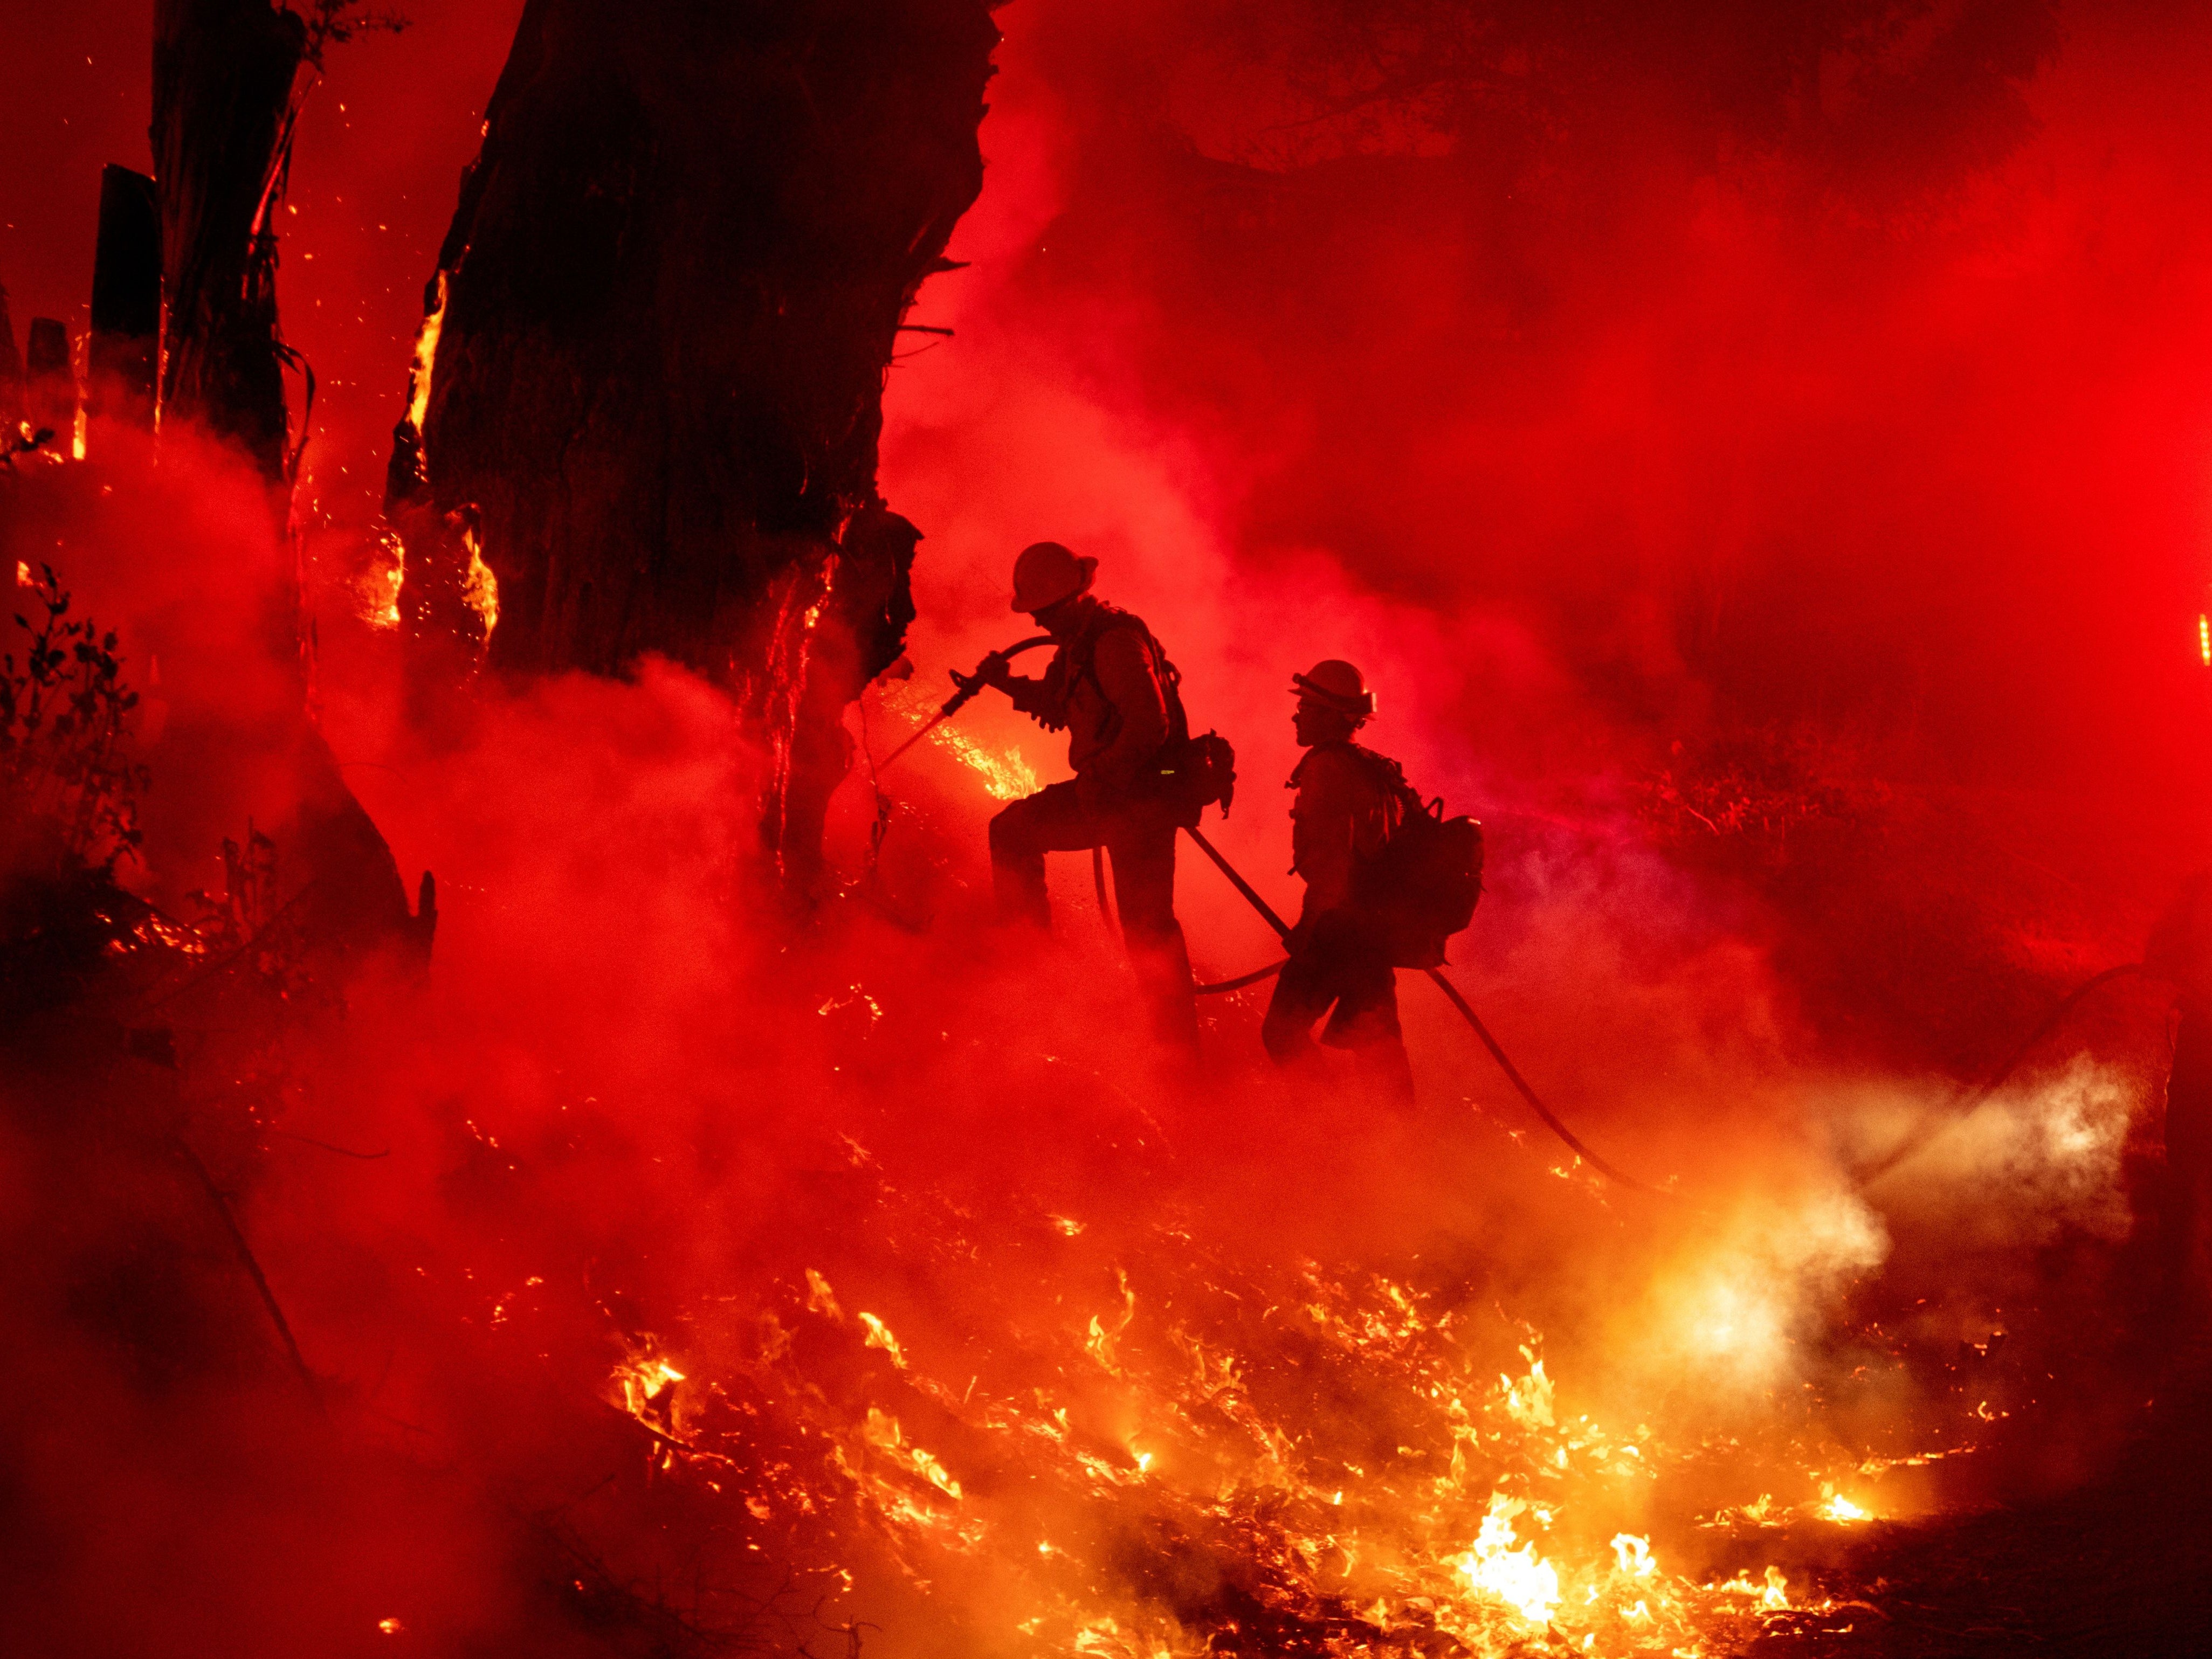 Firefighters struggle to contain flames in Santa Paula, California